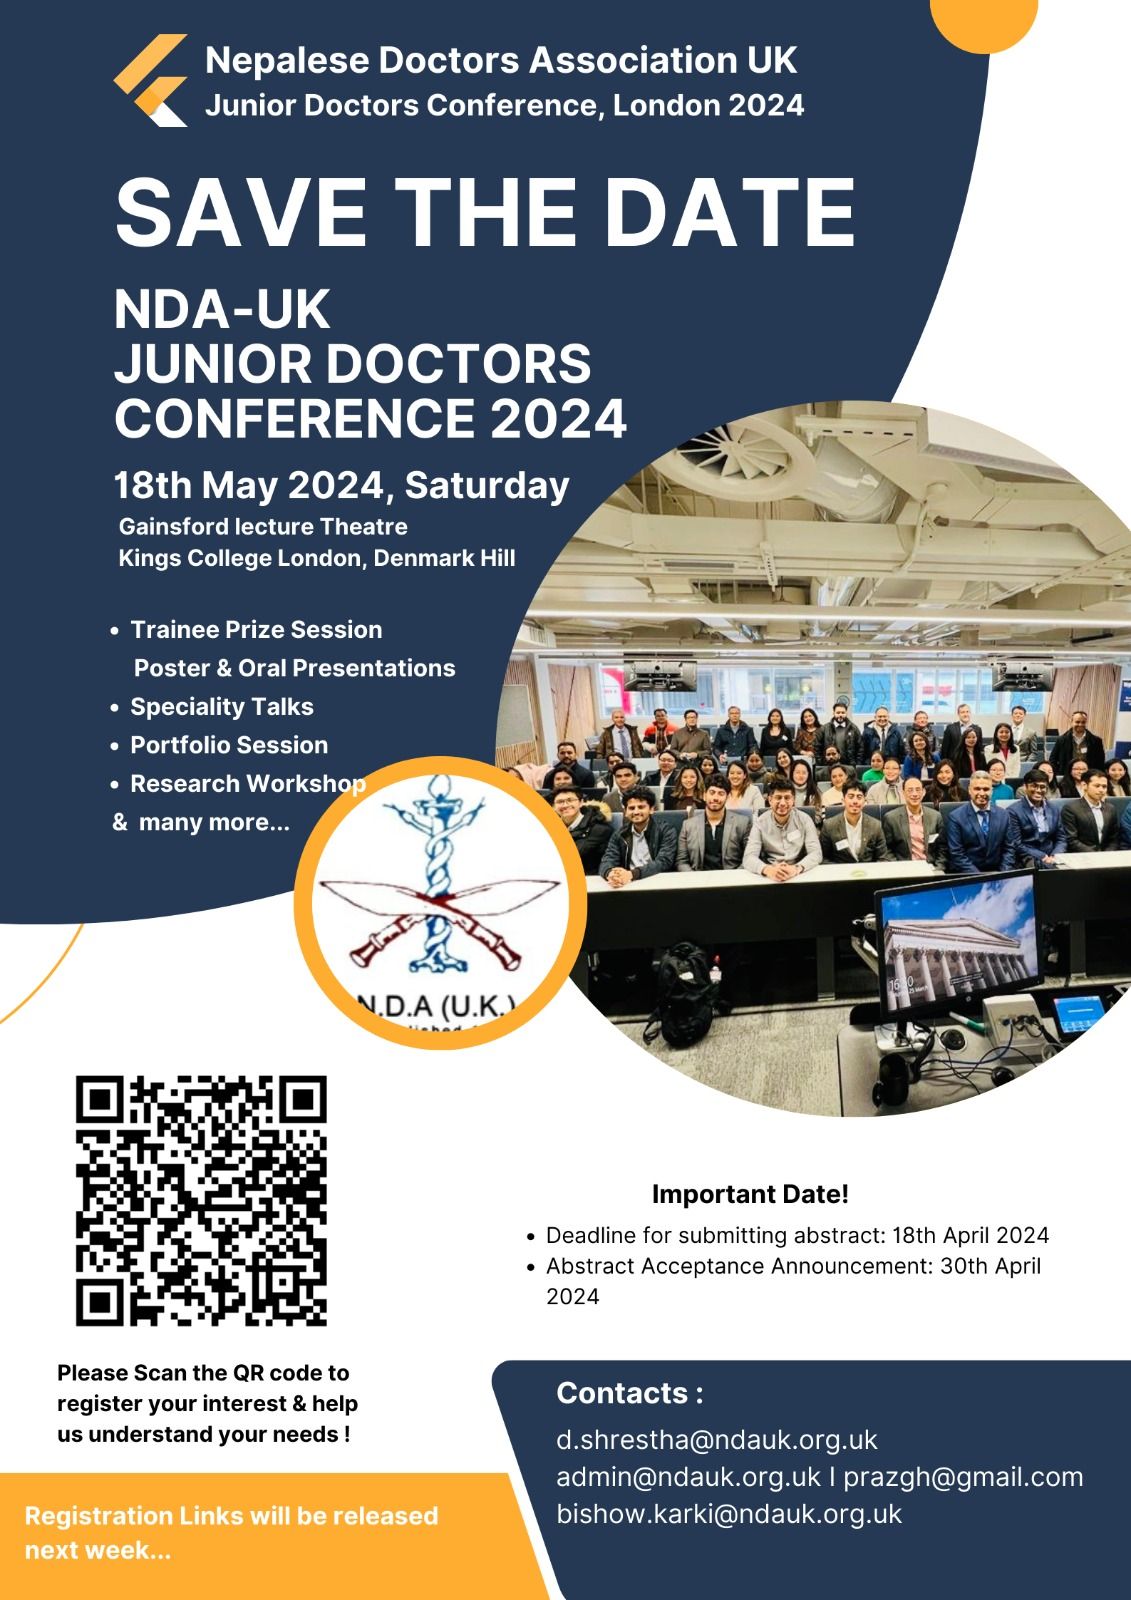 NDA-UK National Medical, Surgical and Dental Conference 2024 | London